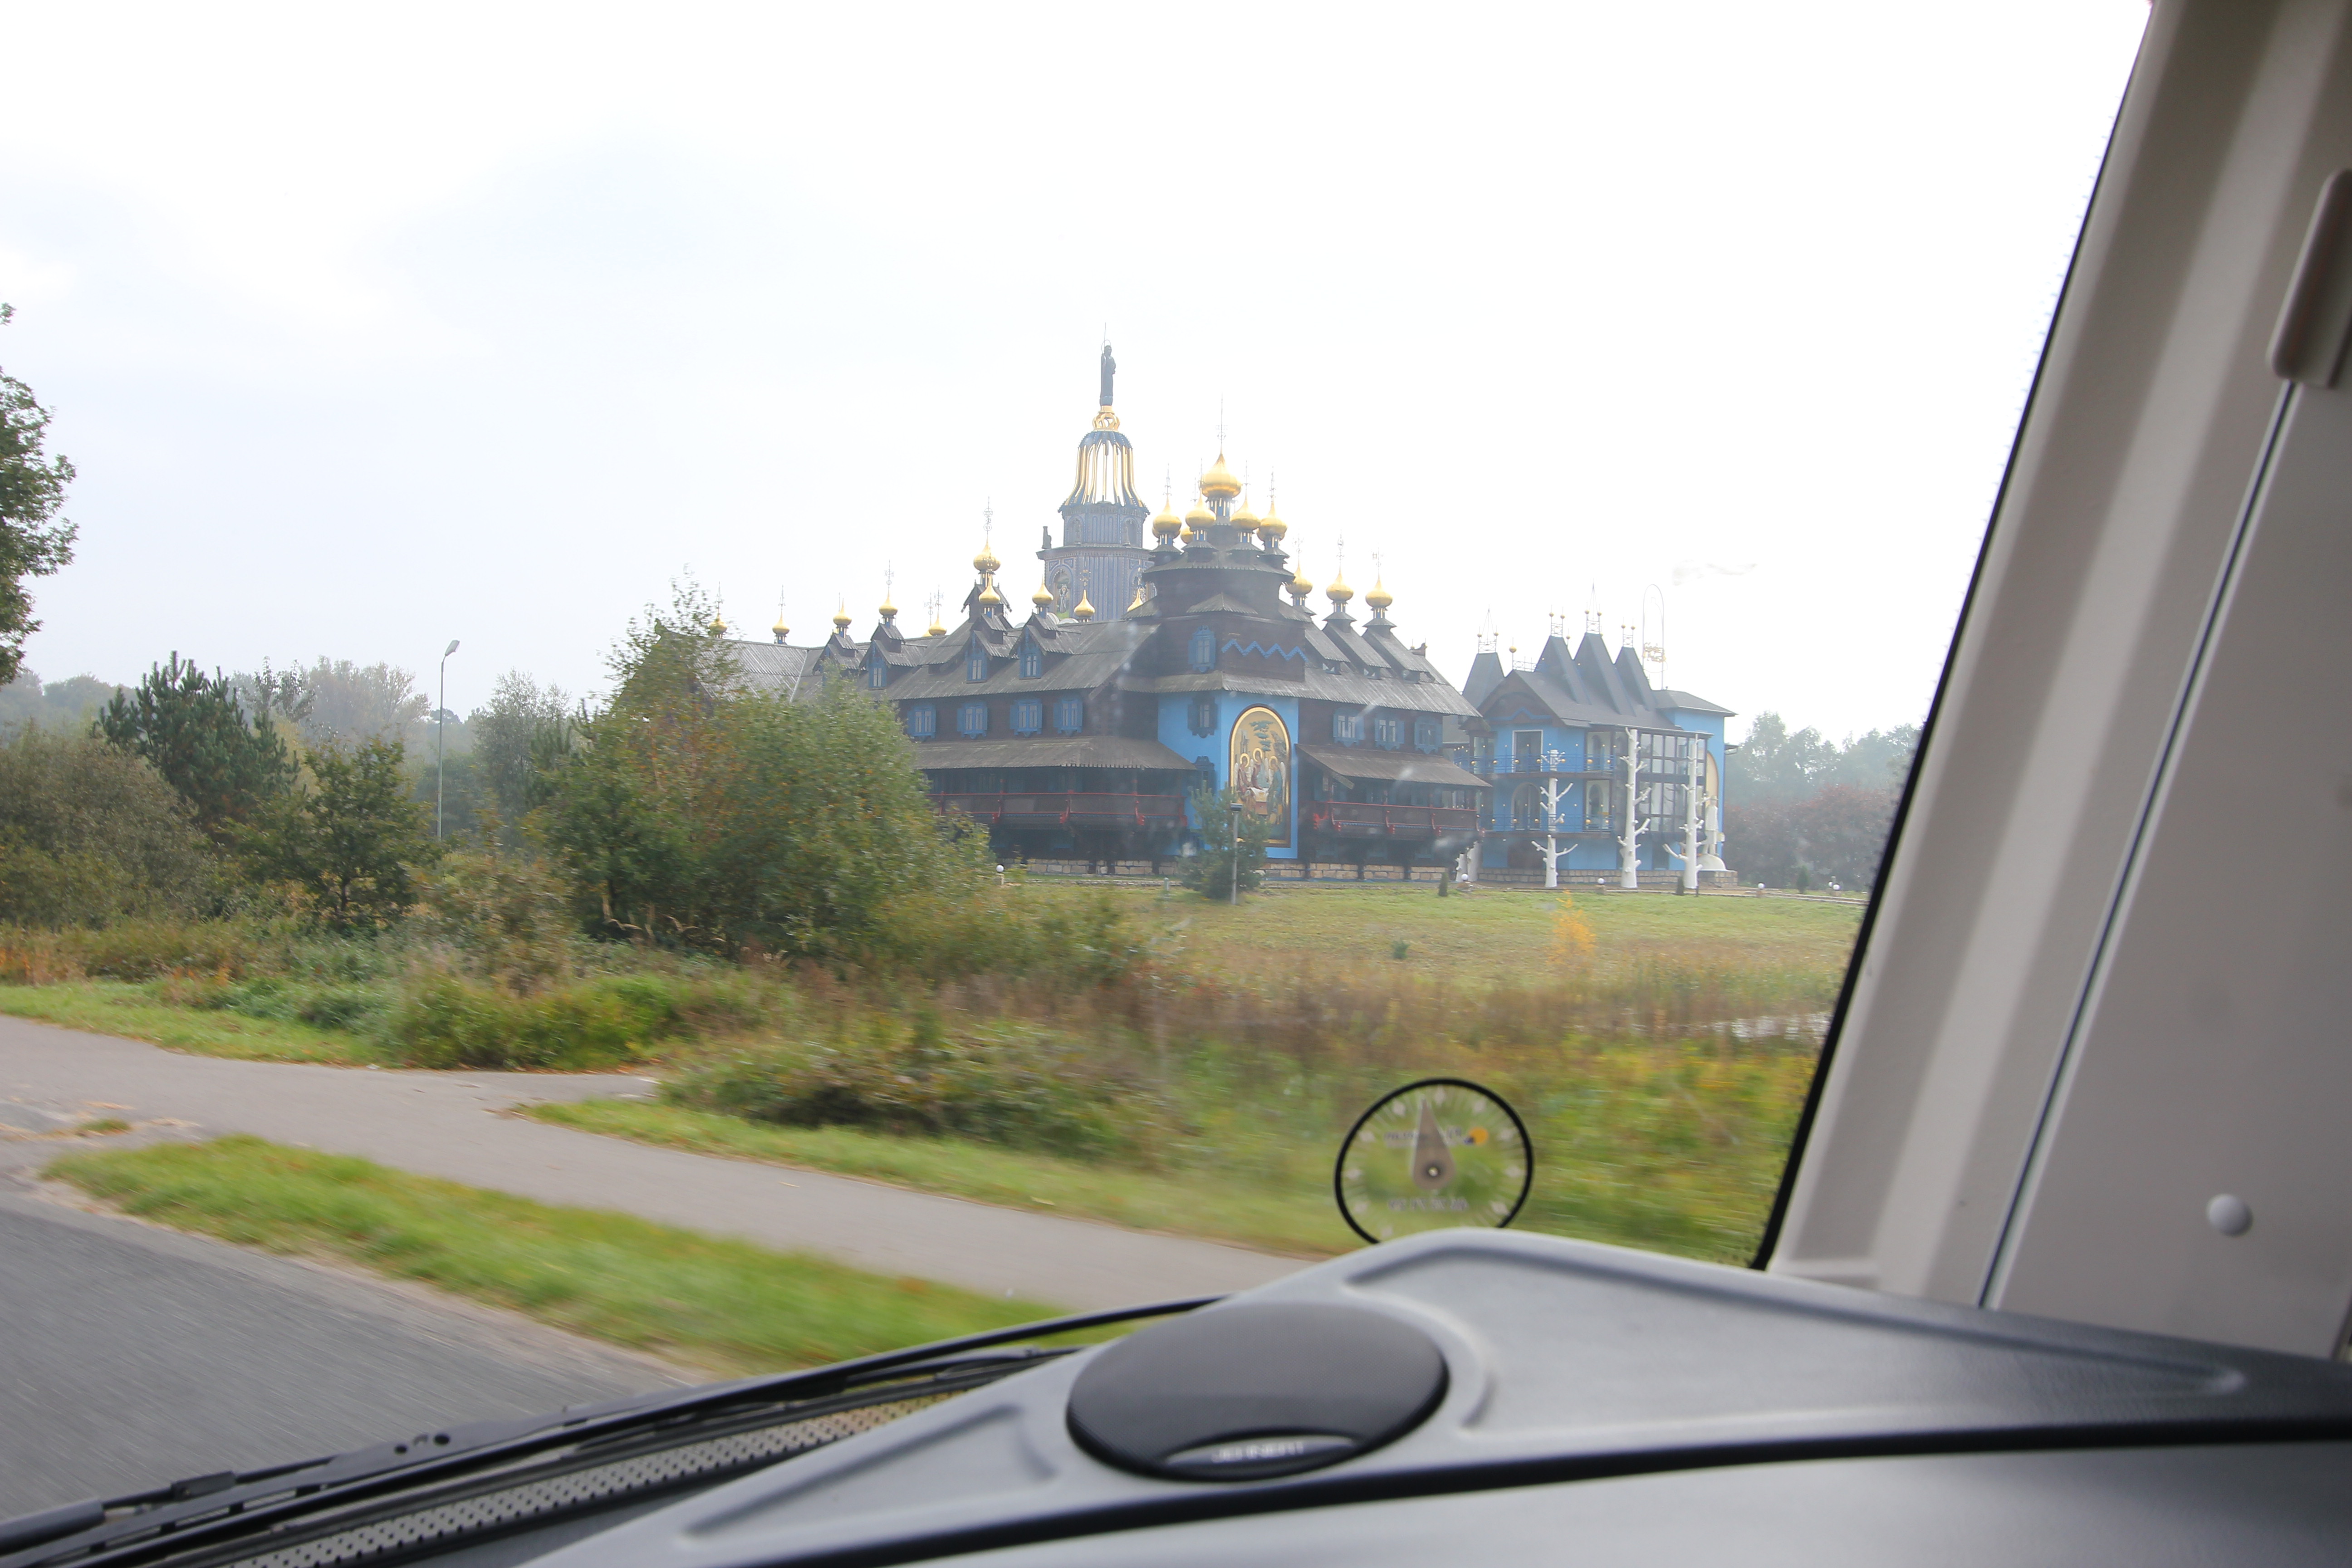 I byen Gifhorn passerer vi et stort vind- og vandmøllemuseum som også rummer denne russisk ortodokse flotte kirke, som vi ikke skal se i dag. Men vi skal besøge den en dag.